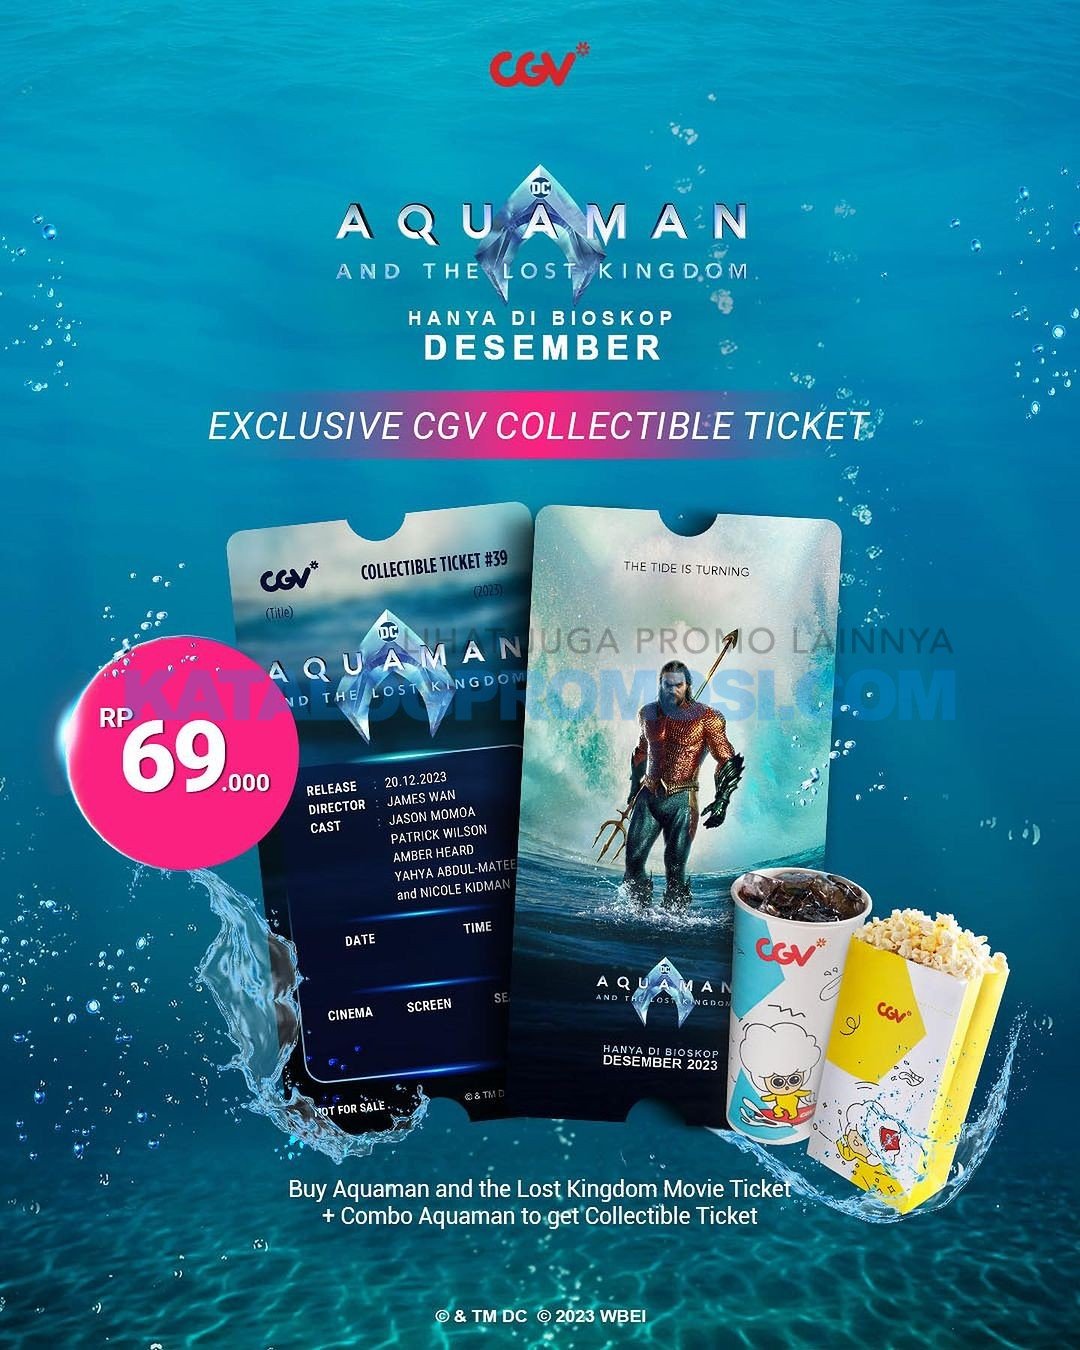 Promo CGV CINEMA BELI TICKET Aquaman and The Lost Kingdom + Combo Aquaman GRATIS Collectible Ticket